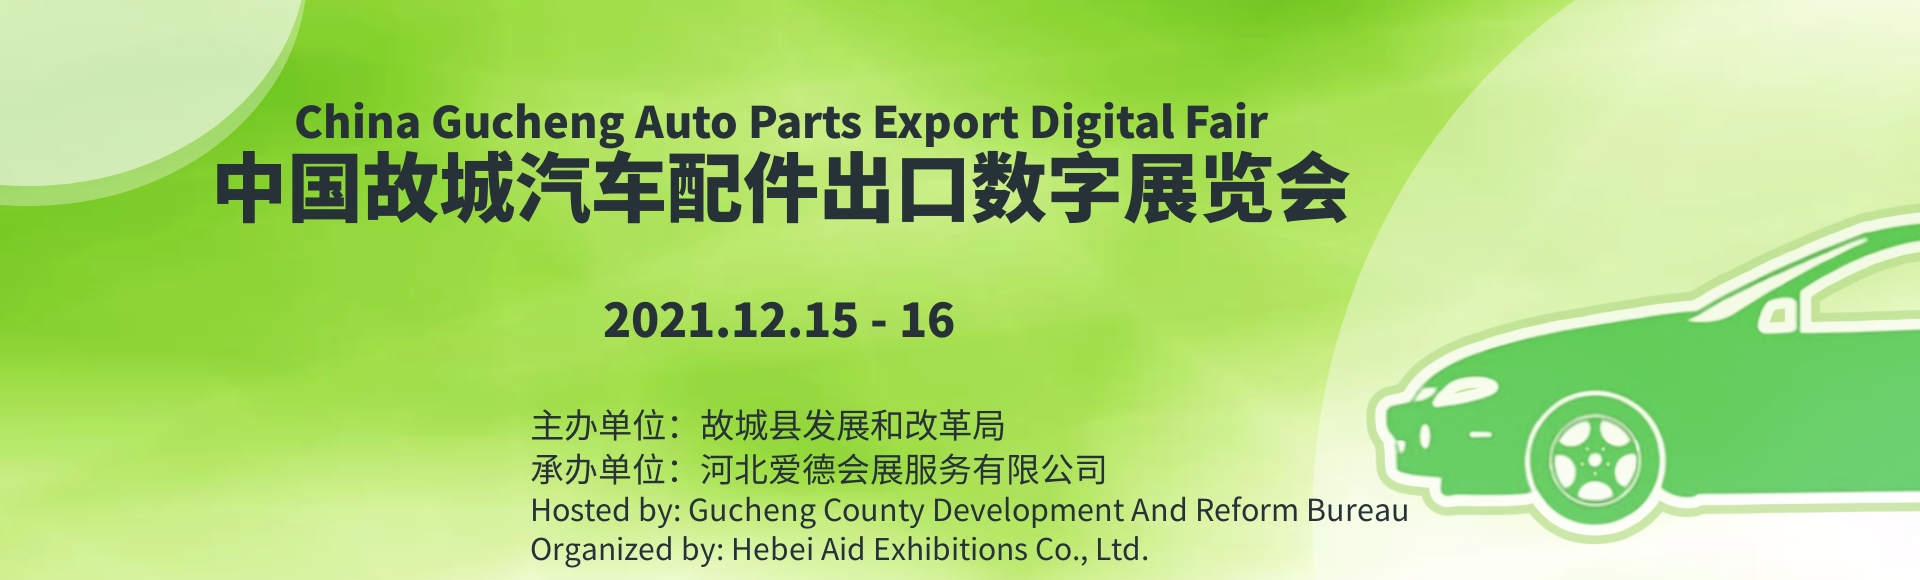 <font color=#ff0000>2021中国（故城）汽车配件出口数字展览会</font>